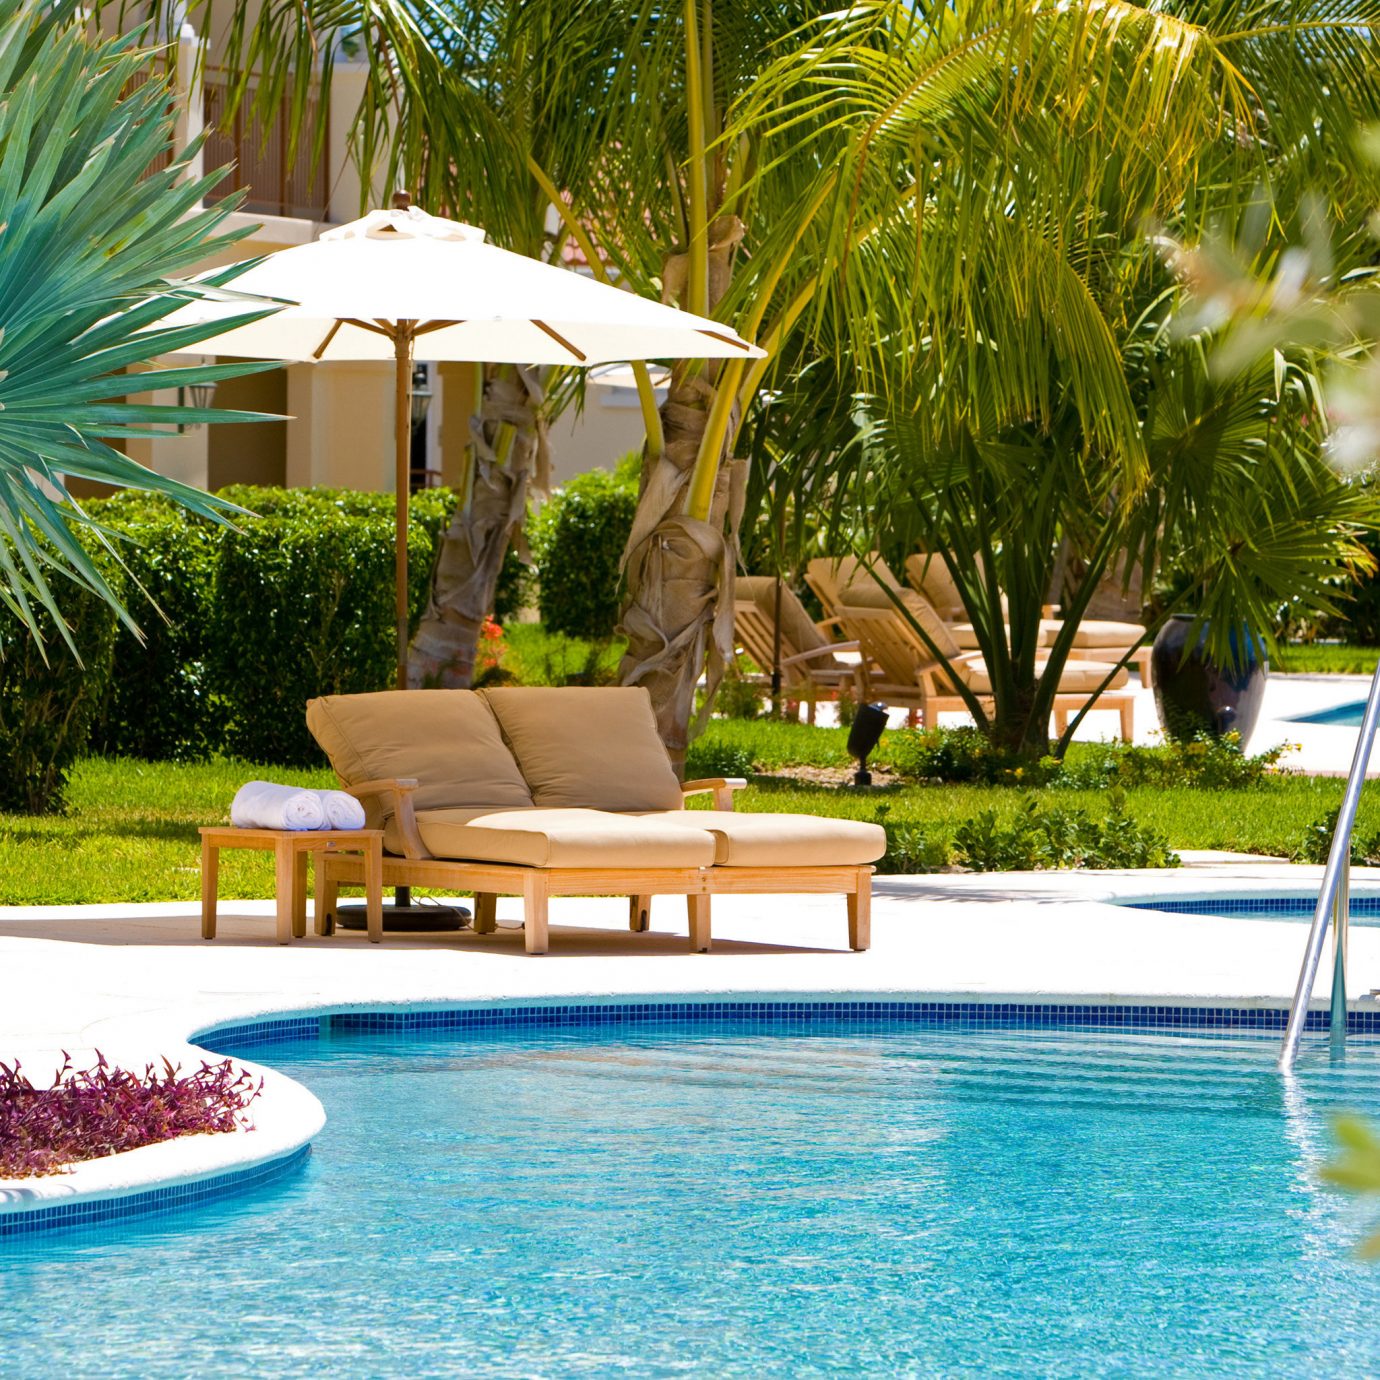 Beachfront Grounds Play Pool tree Resort swimming pool leisure property backyard Villa home condominium swimming palm